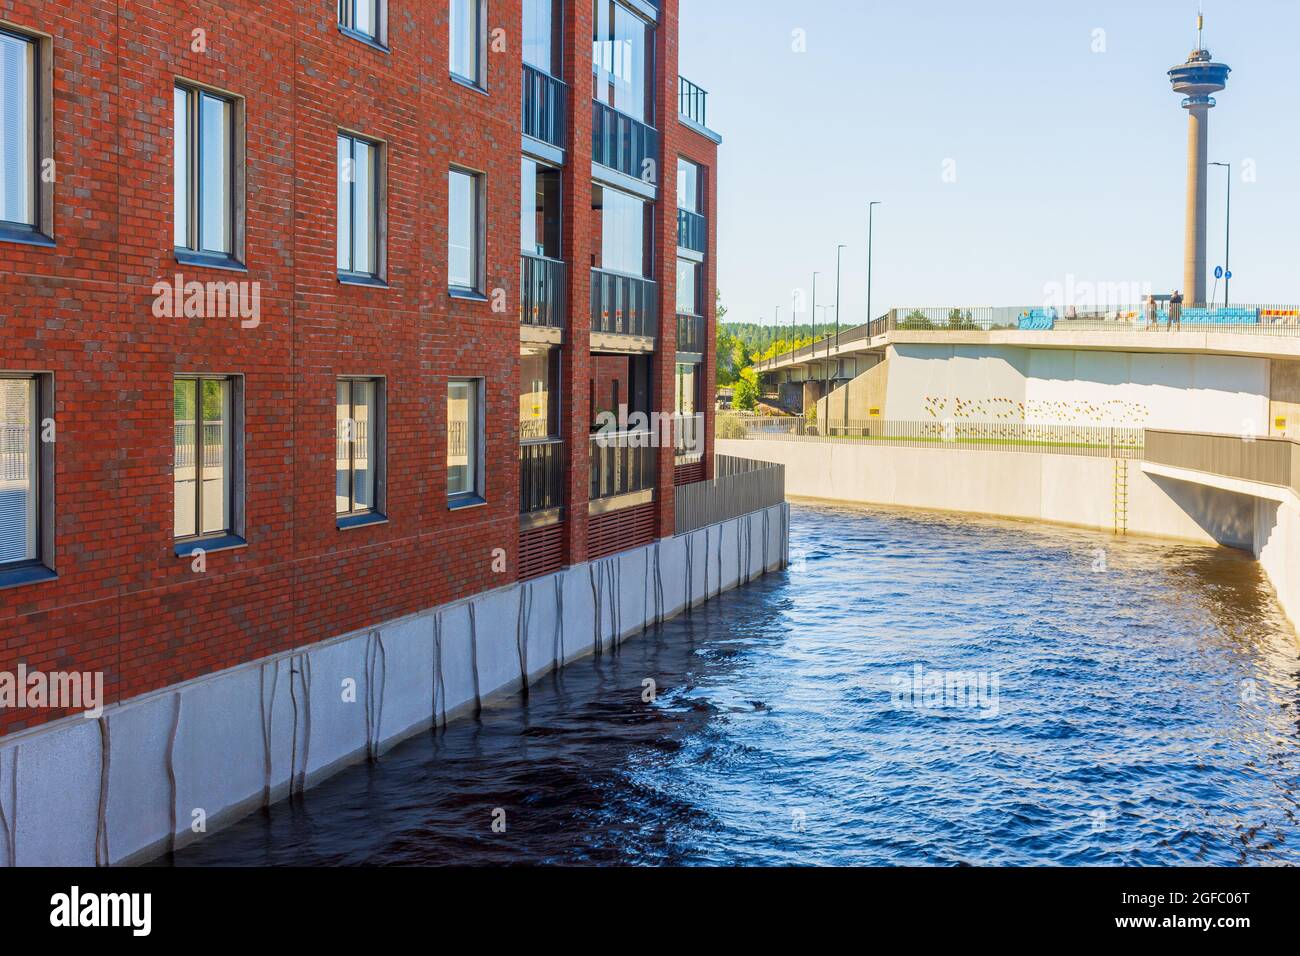 Kanal bei Ranta-Tampella in Tampere Finnland Stockfotografie - Alamy